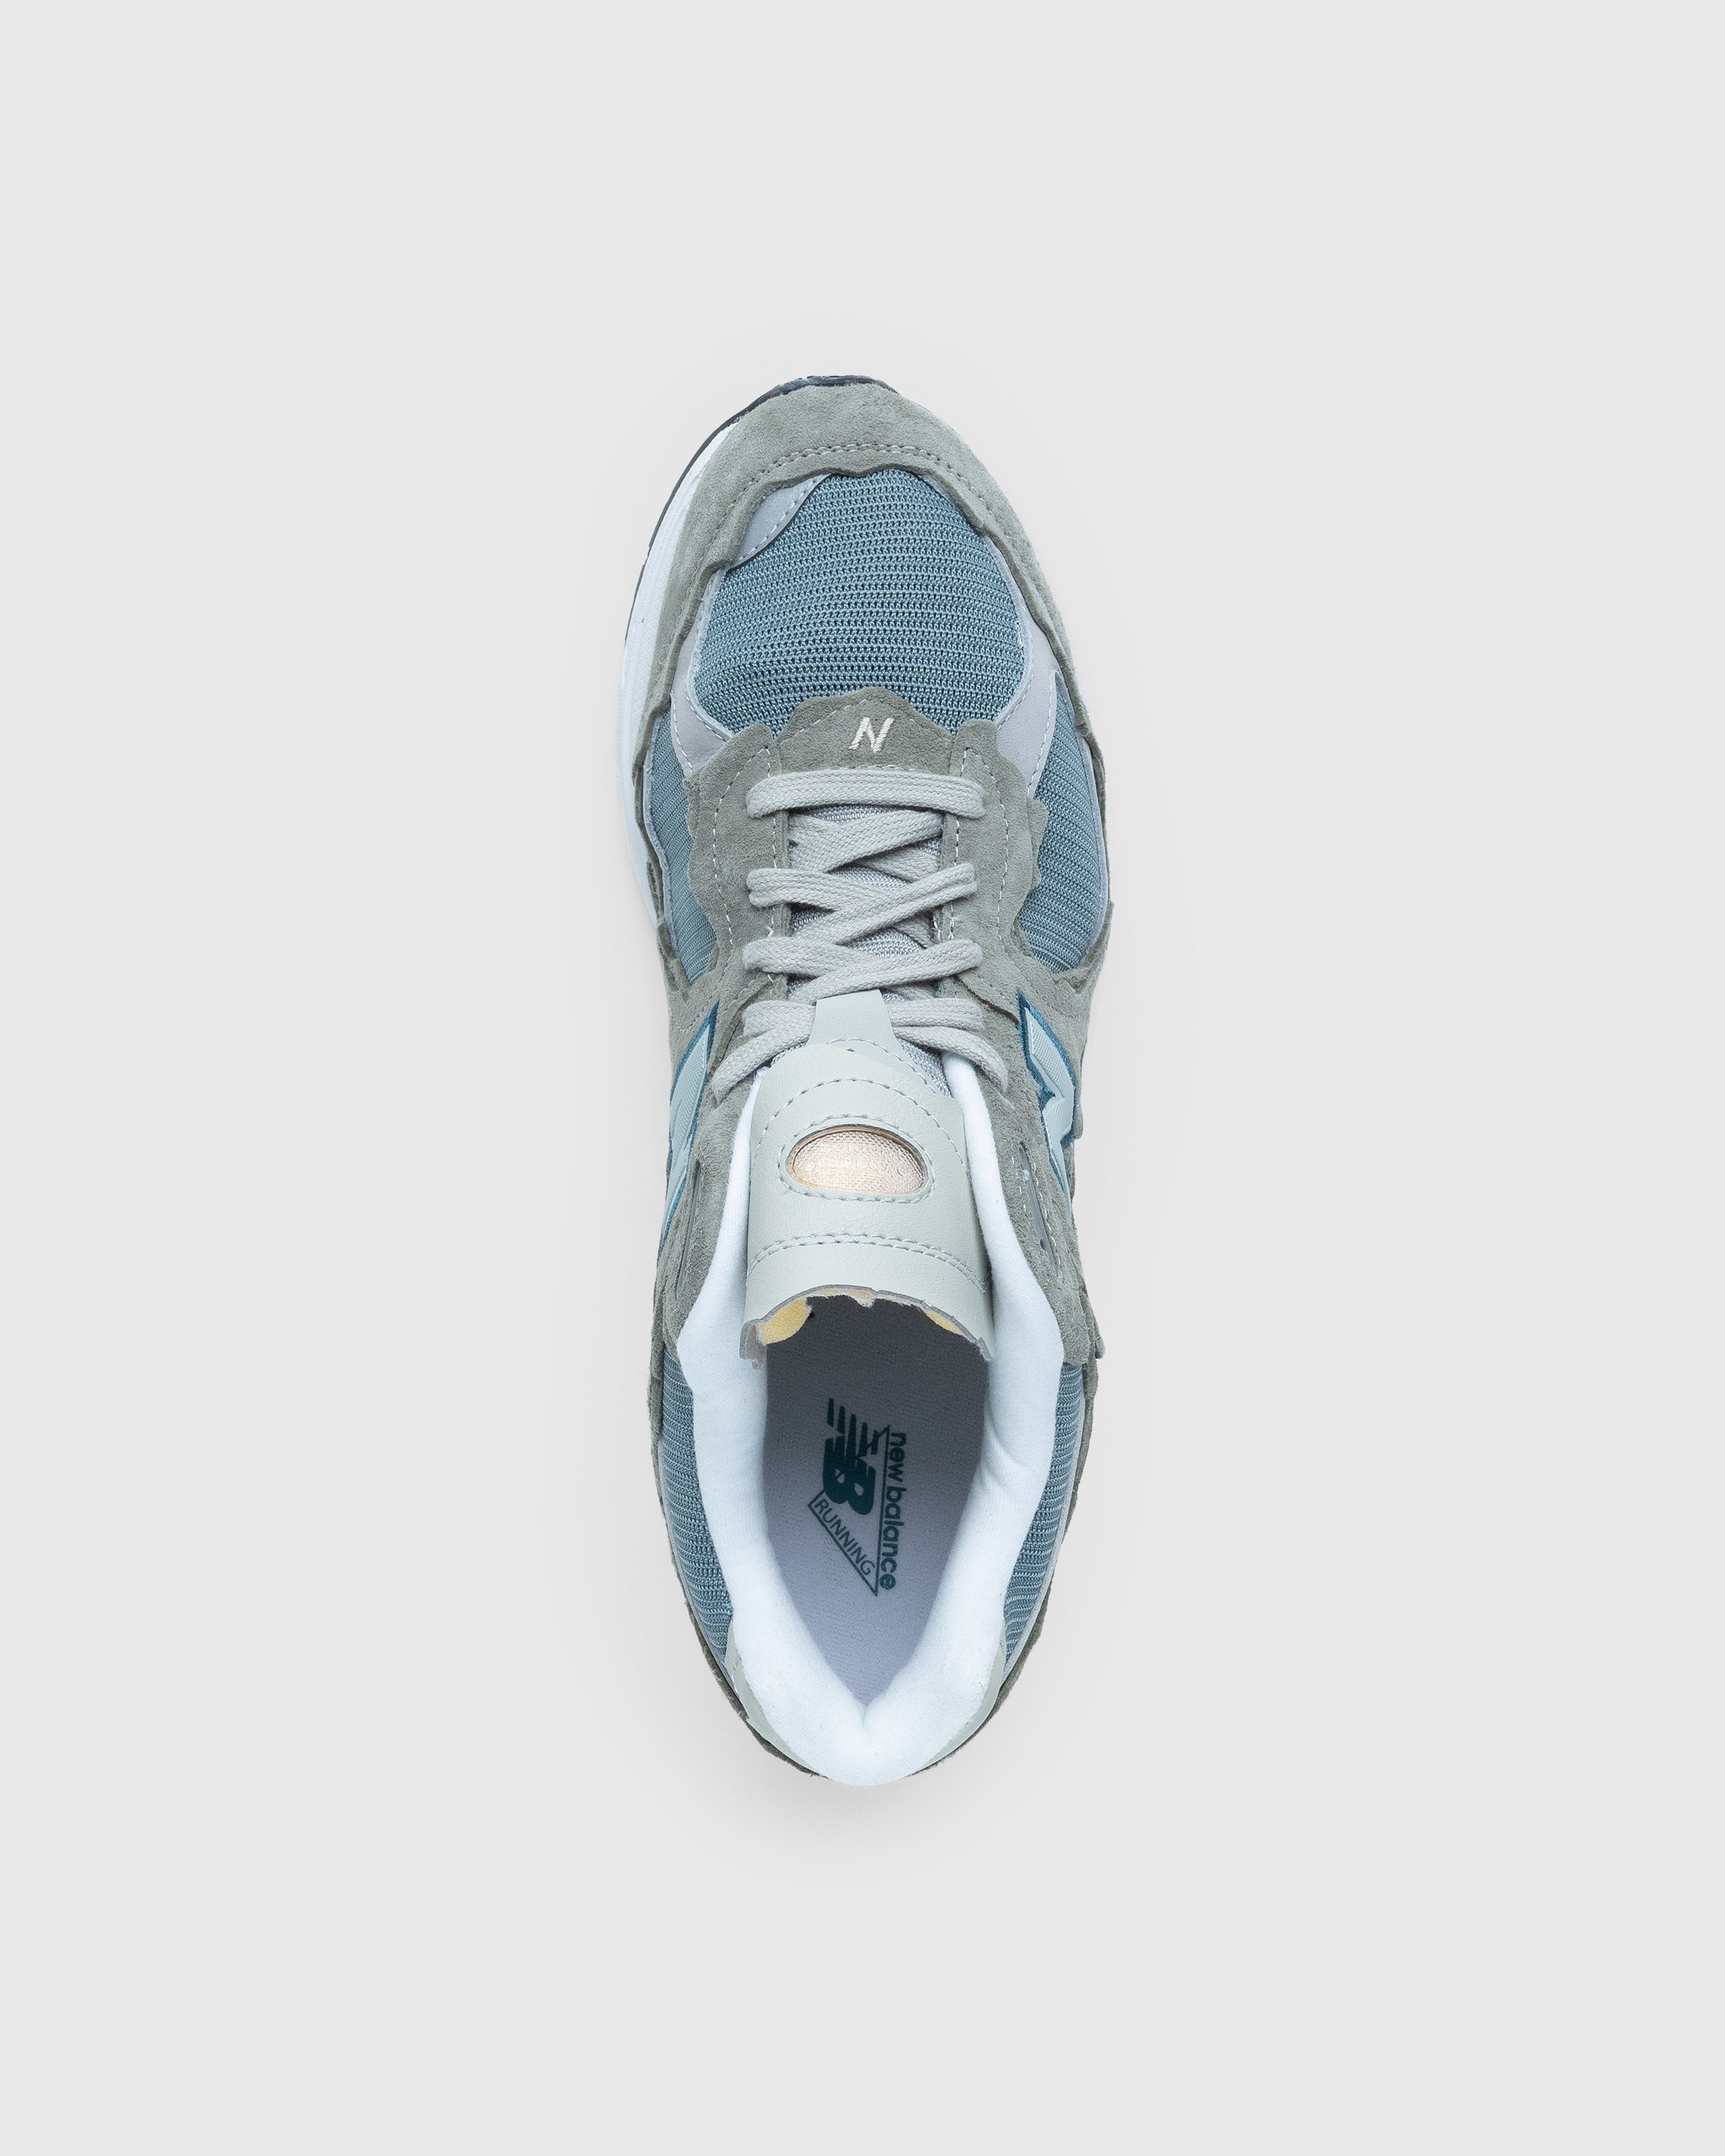 New Balance – M2002RDD Mirage Grey - Sneakers - Grey - Image 5